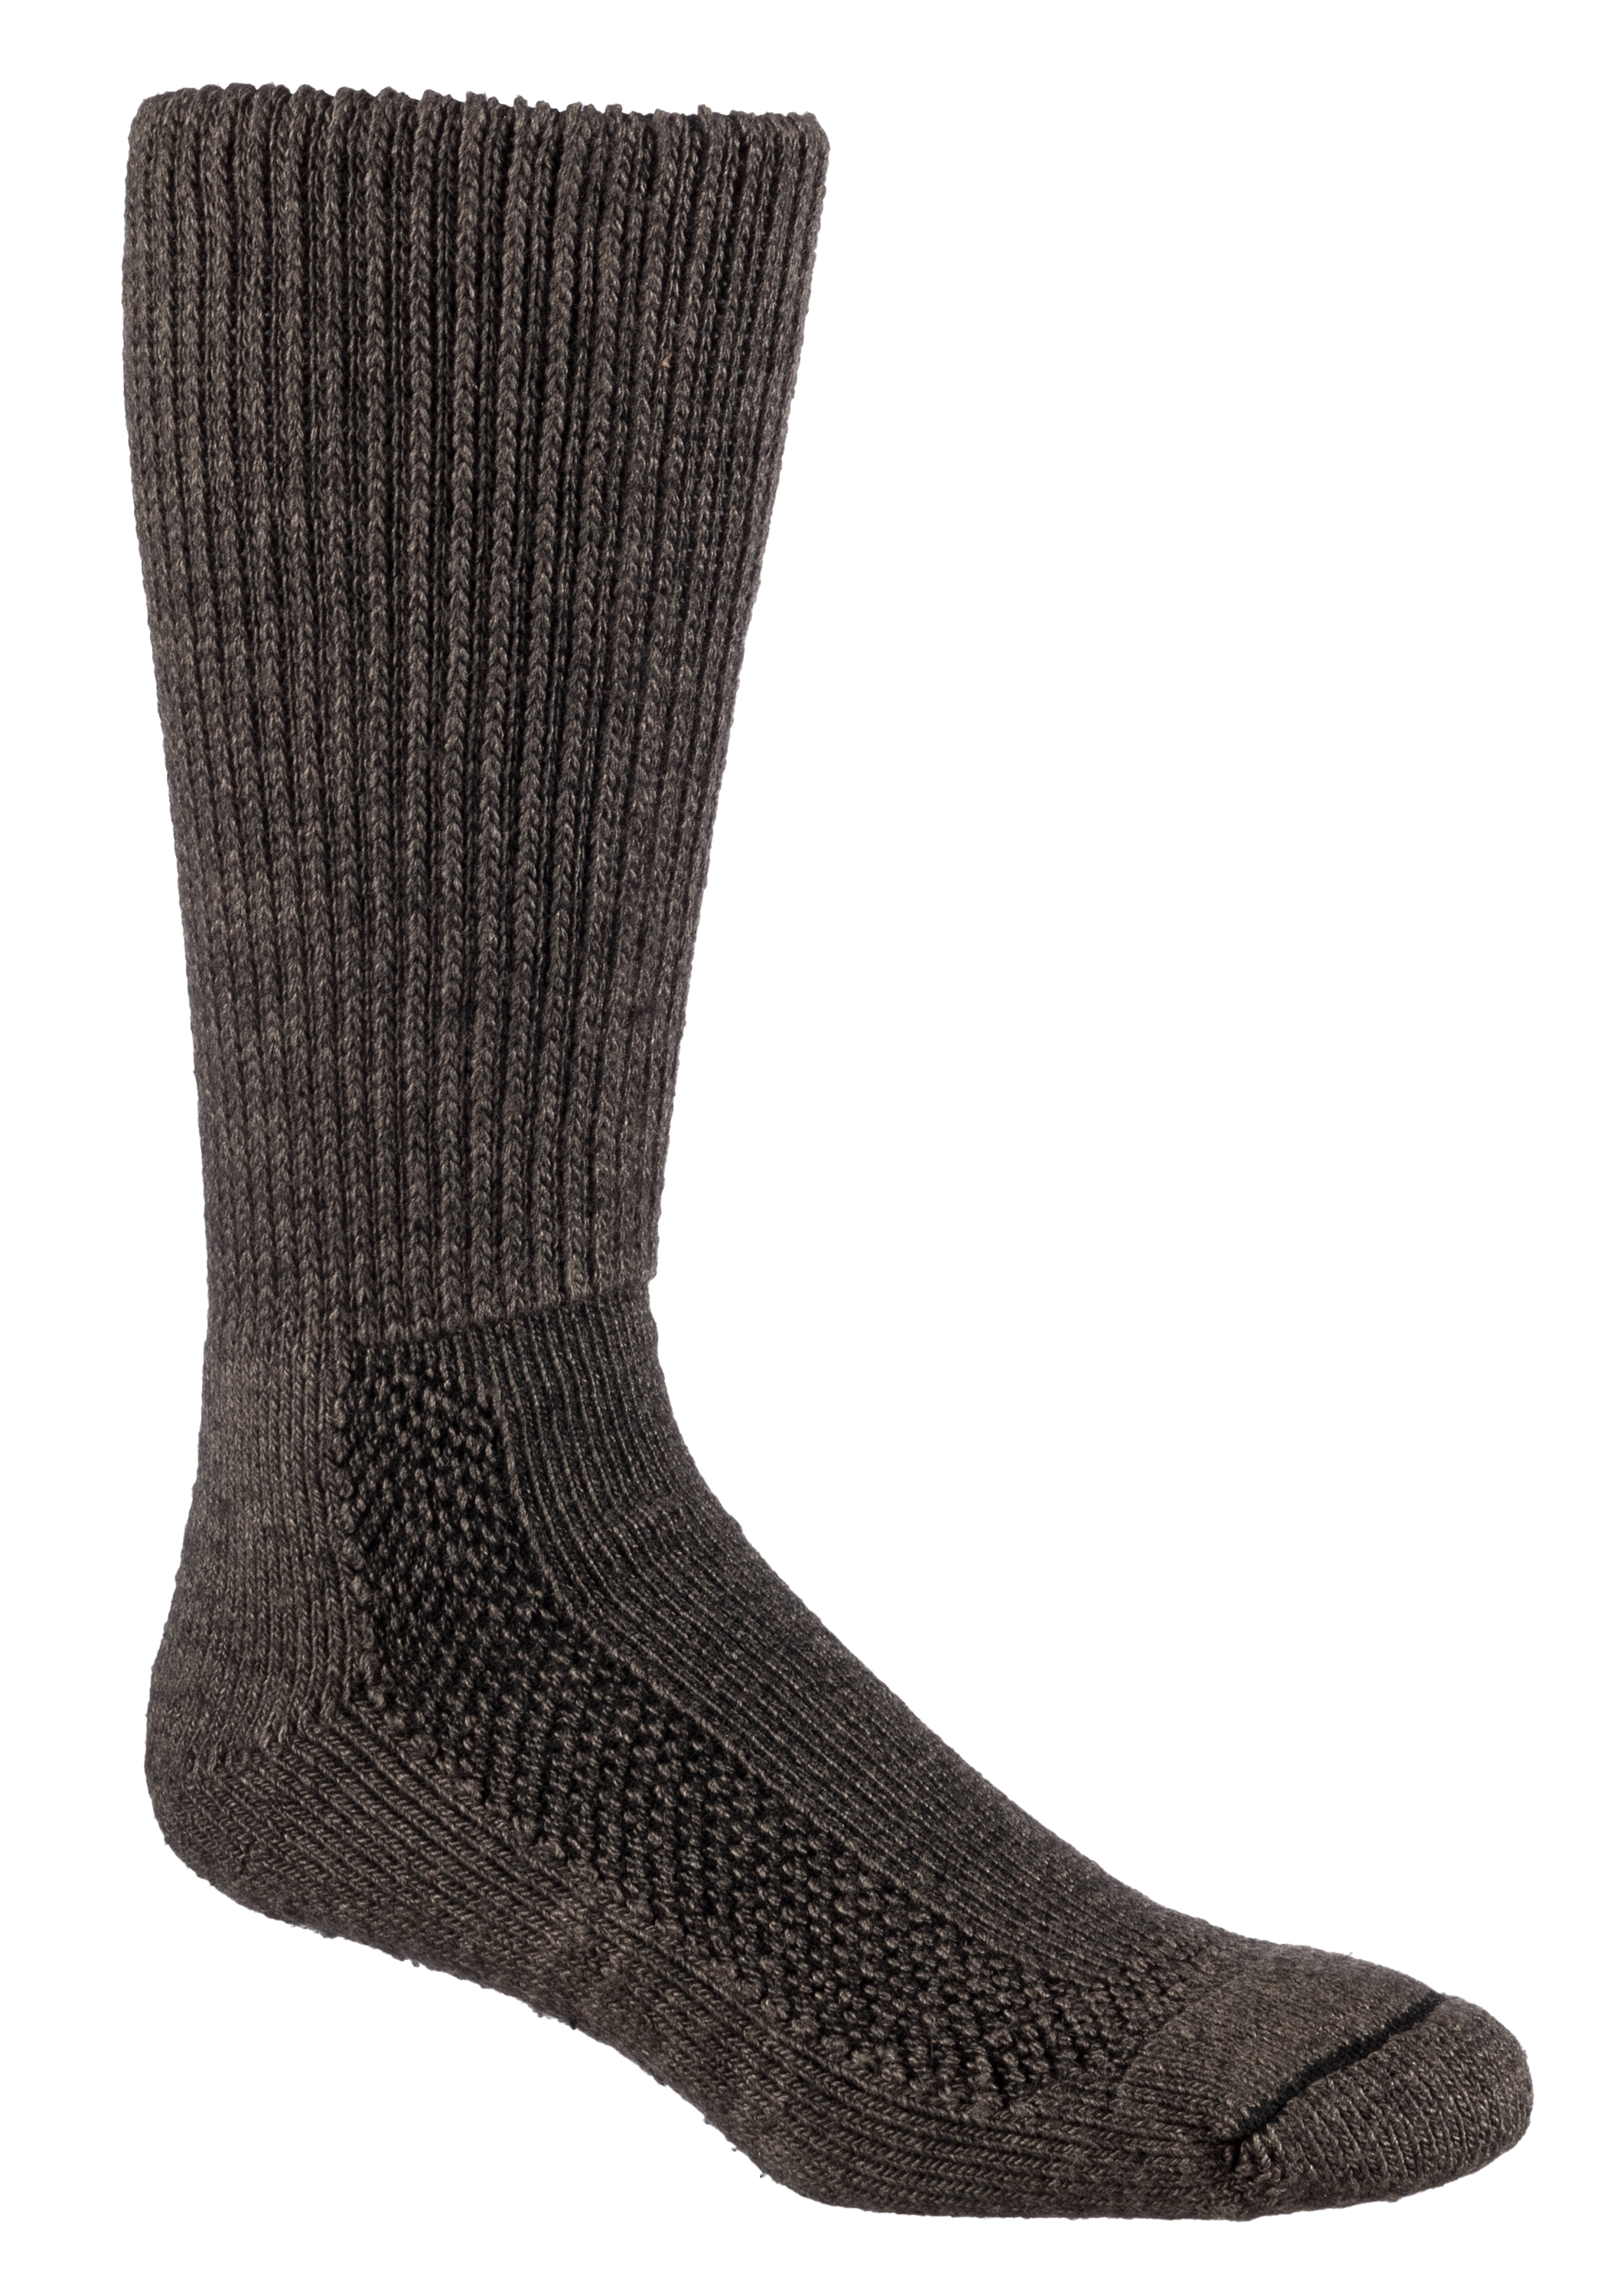 RedHead All-Purpose Heavyweight Diabetic Comfort Merino Wool Socks for ...